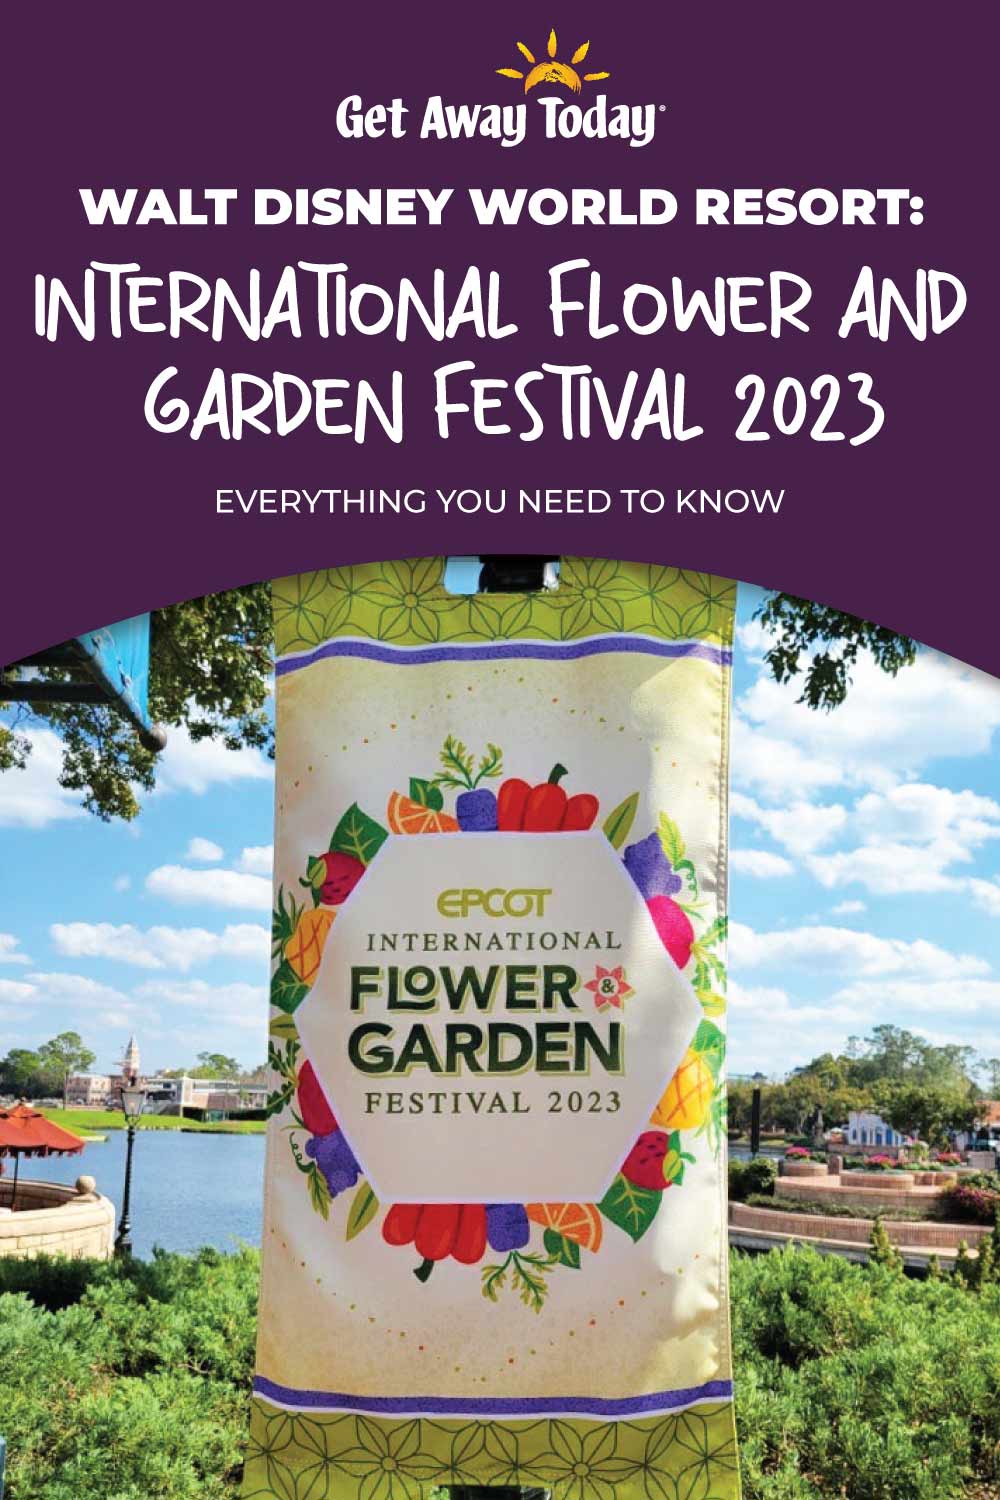 Walt Disney World Resort: International Flower and Garden Festival 2023 || Get Away Today